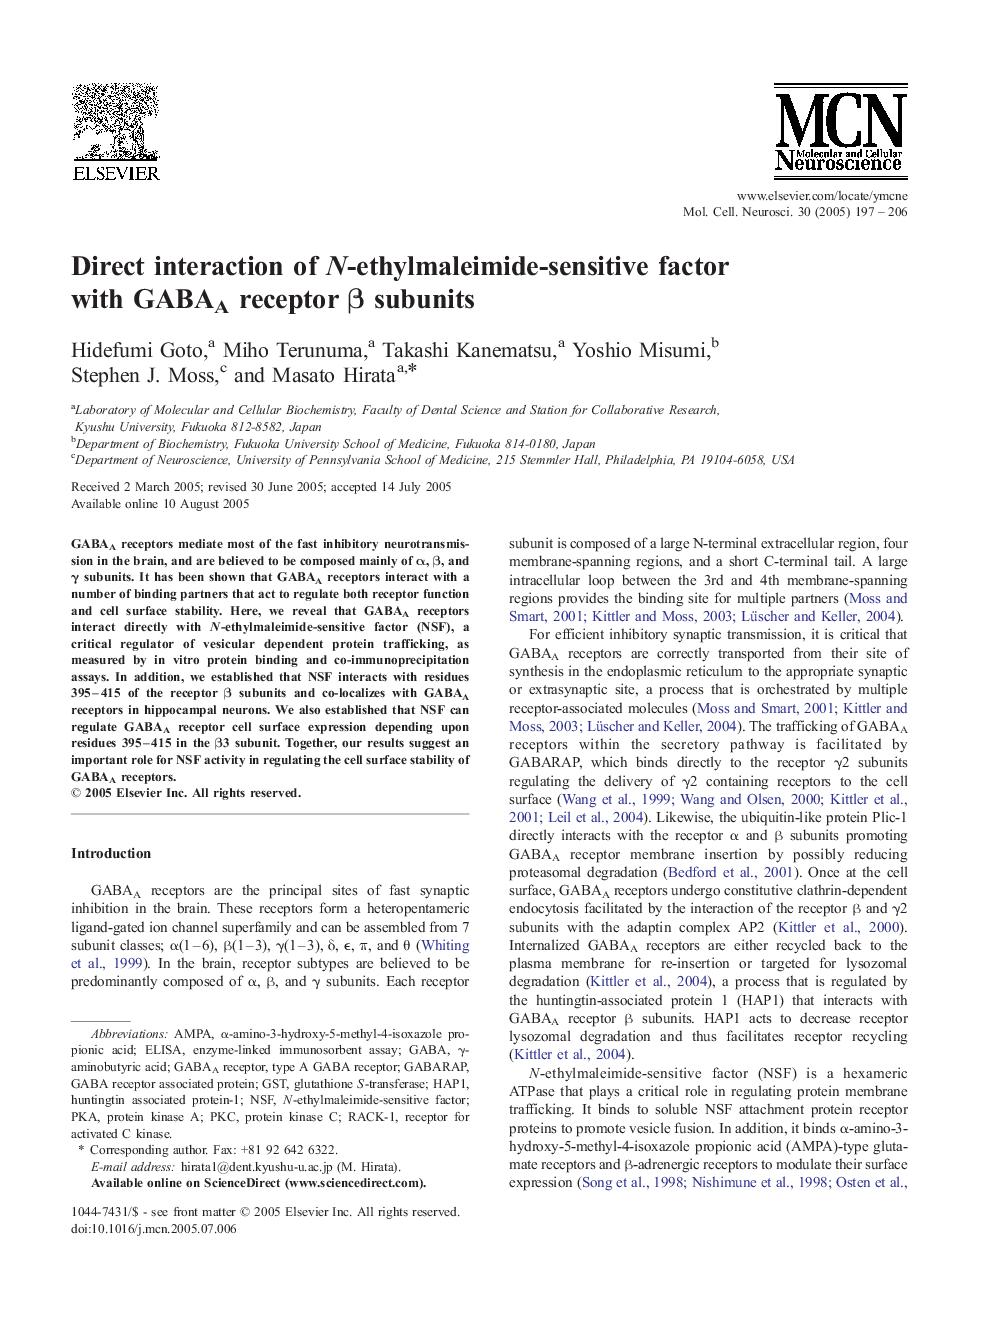 Direct interaction of N-ethylmaleimide-sensitive factor with GABAA receptor Î² subunits